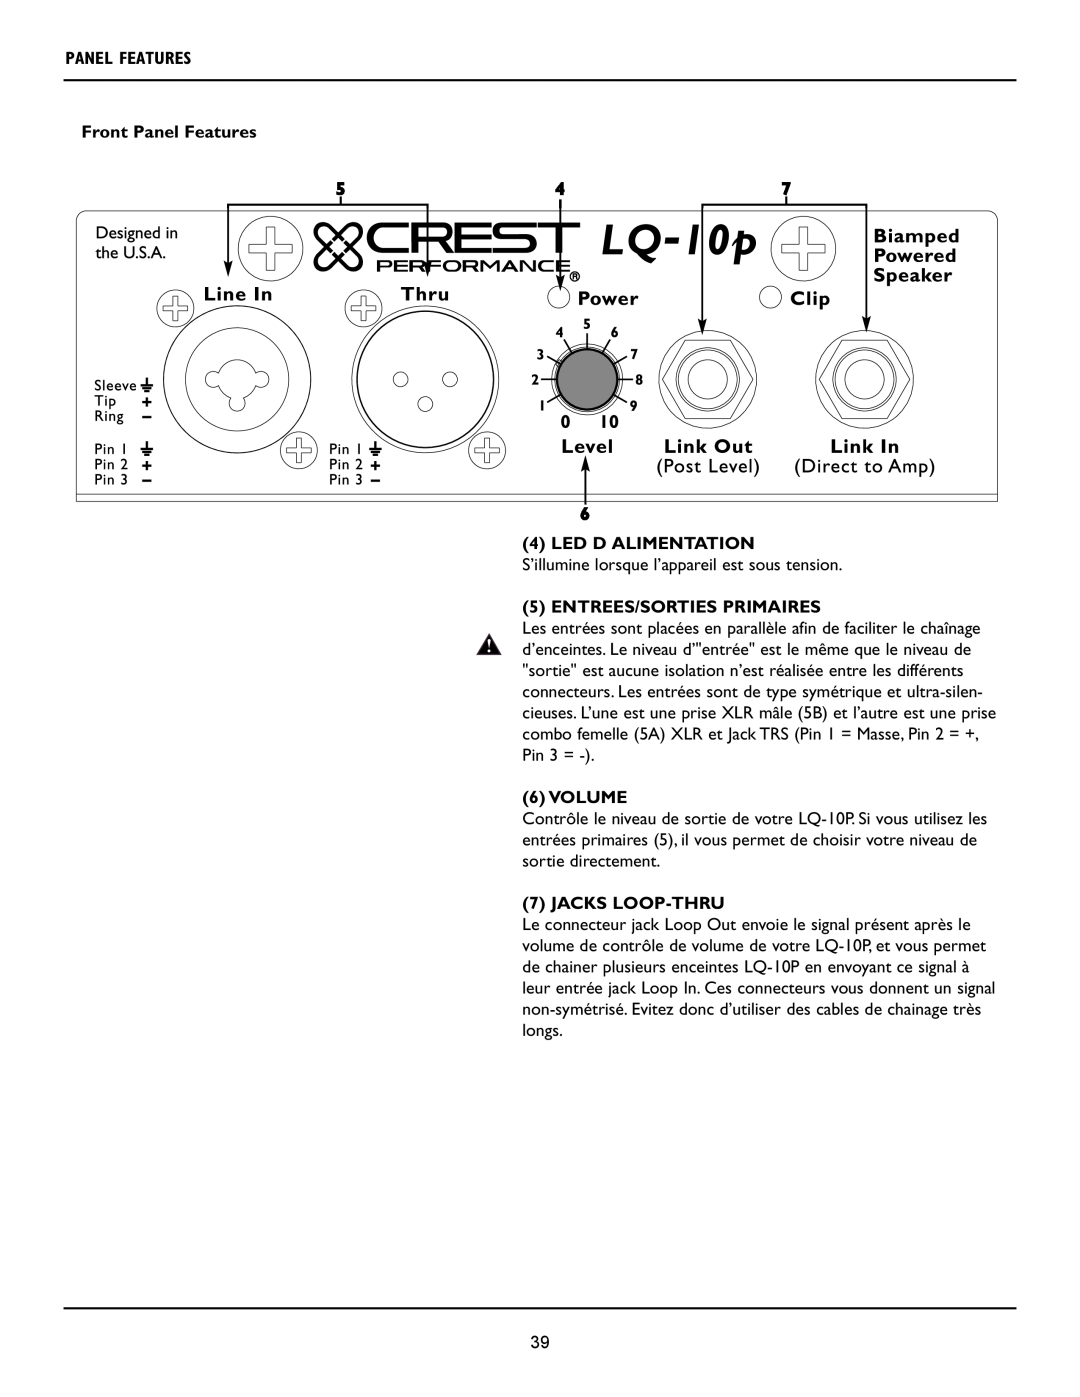 Crest Audio LQ 10P user manual 6 4 LED D ALIMENTATION, Entrees/Sorties Primaires, Volume, Jacks Loop-Thru, Panel Features 